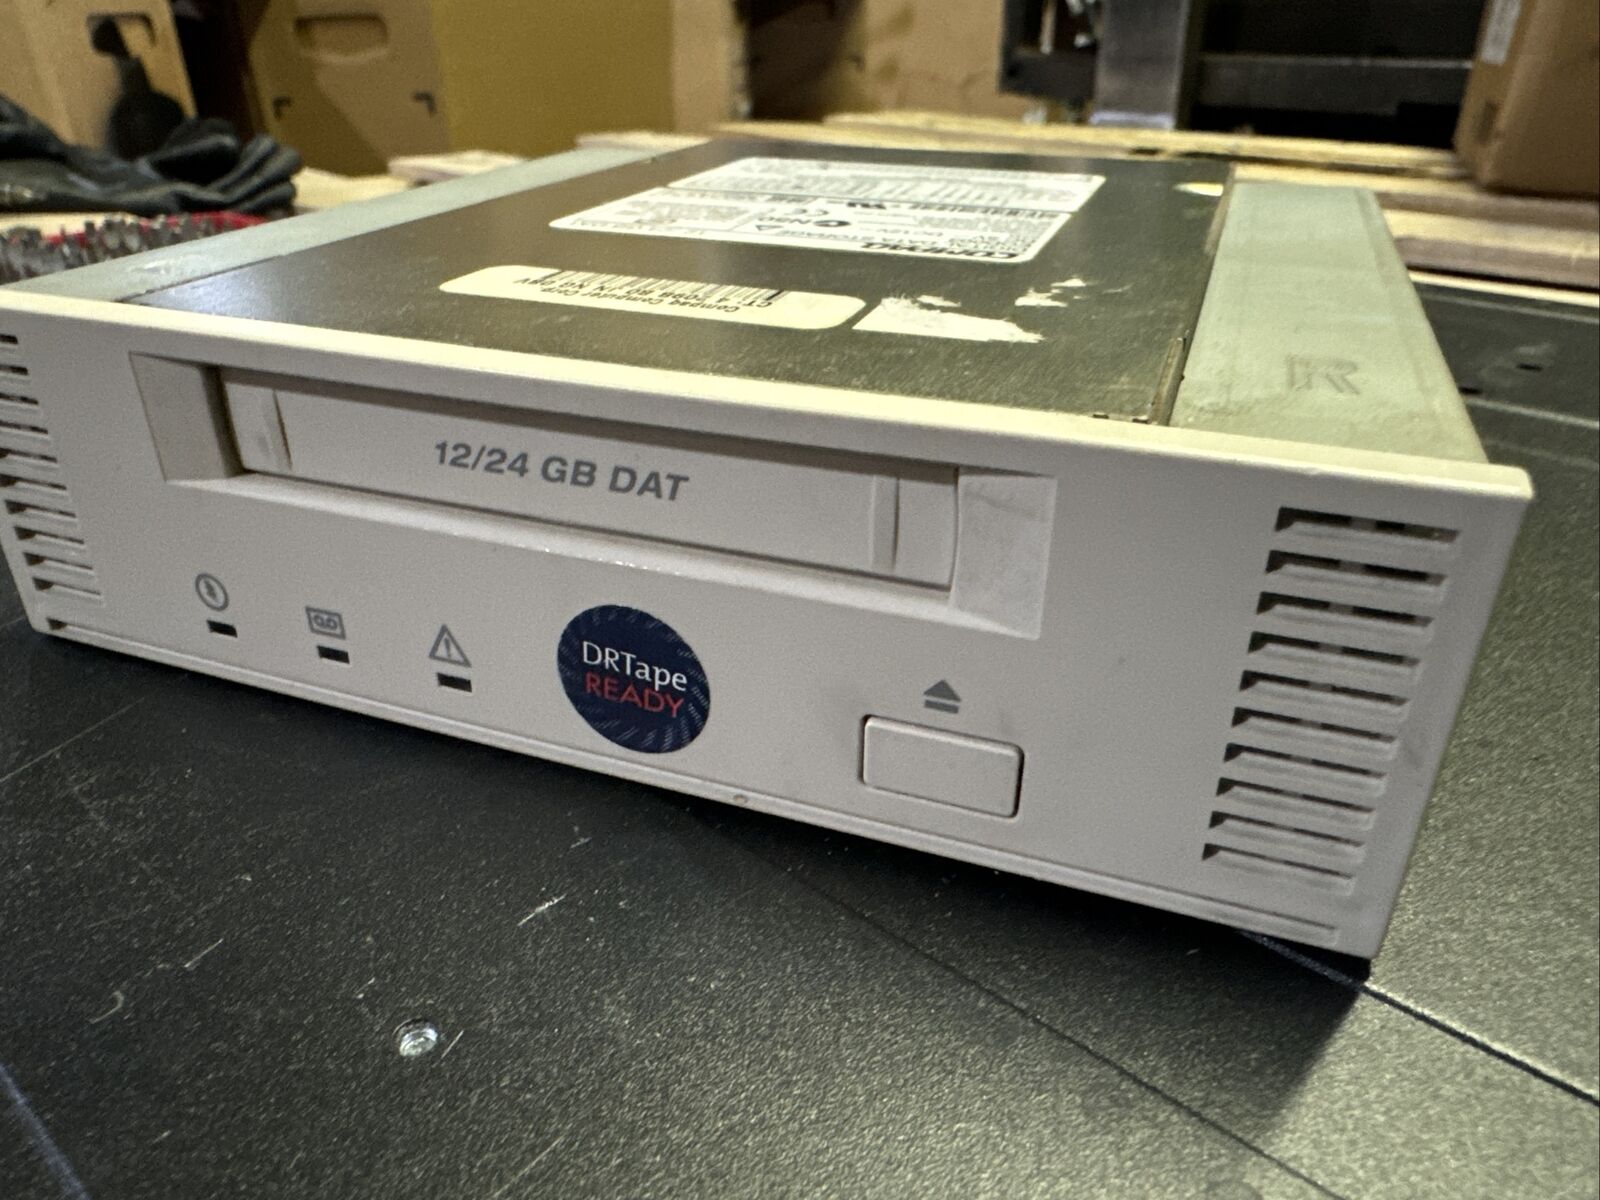 Compaq 12/24GB DAT SDT-9000 EOD003 DDS3 SCSI Beige Tape Drive